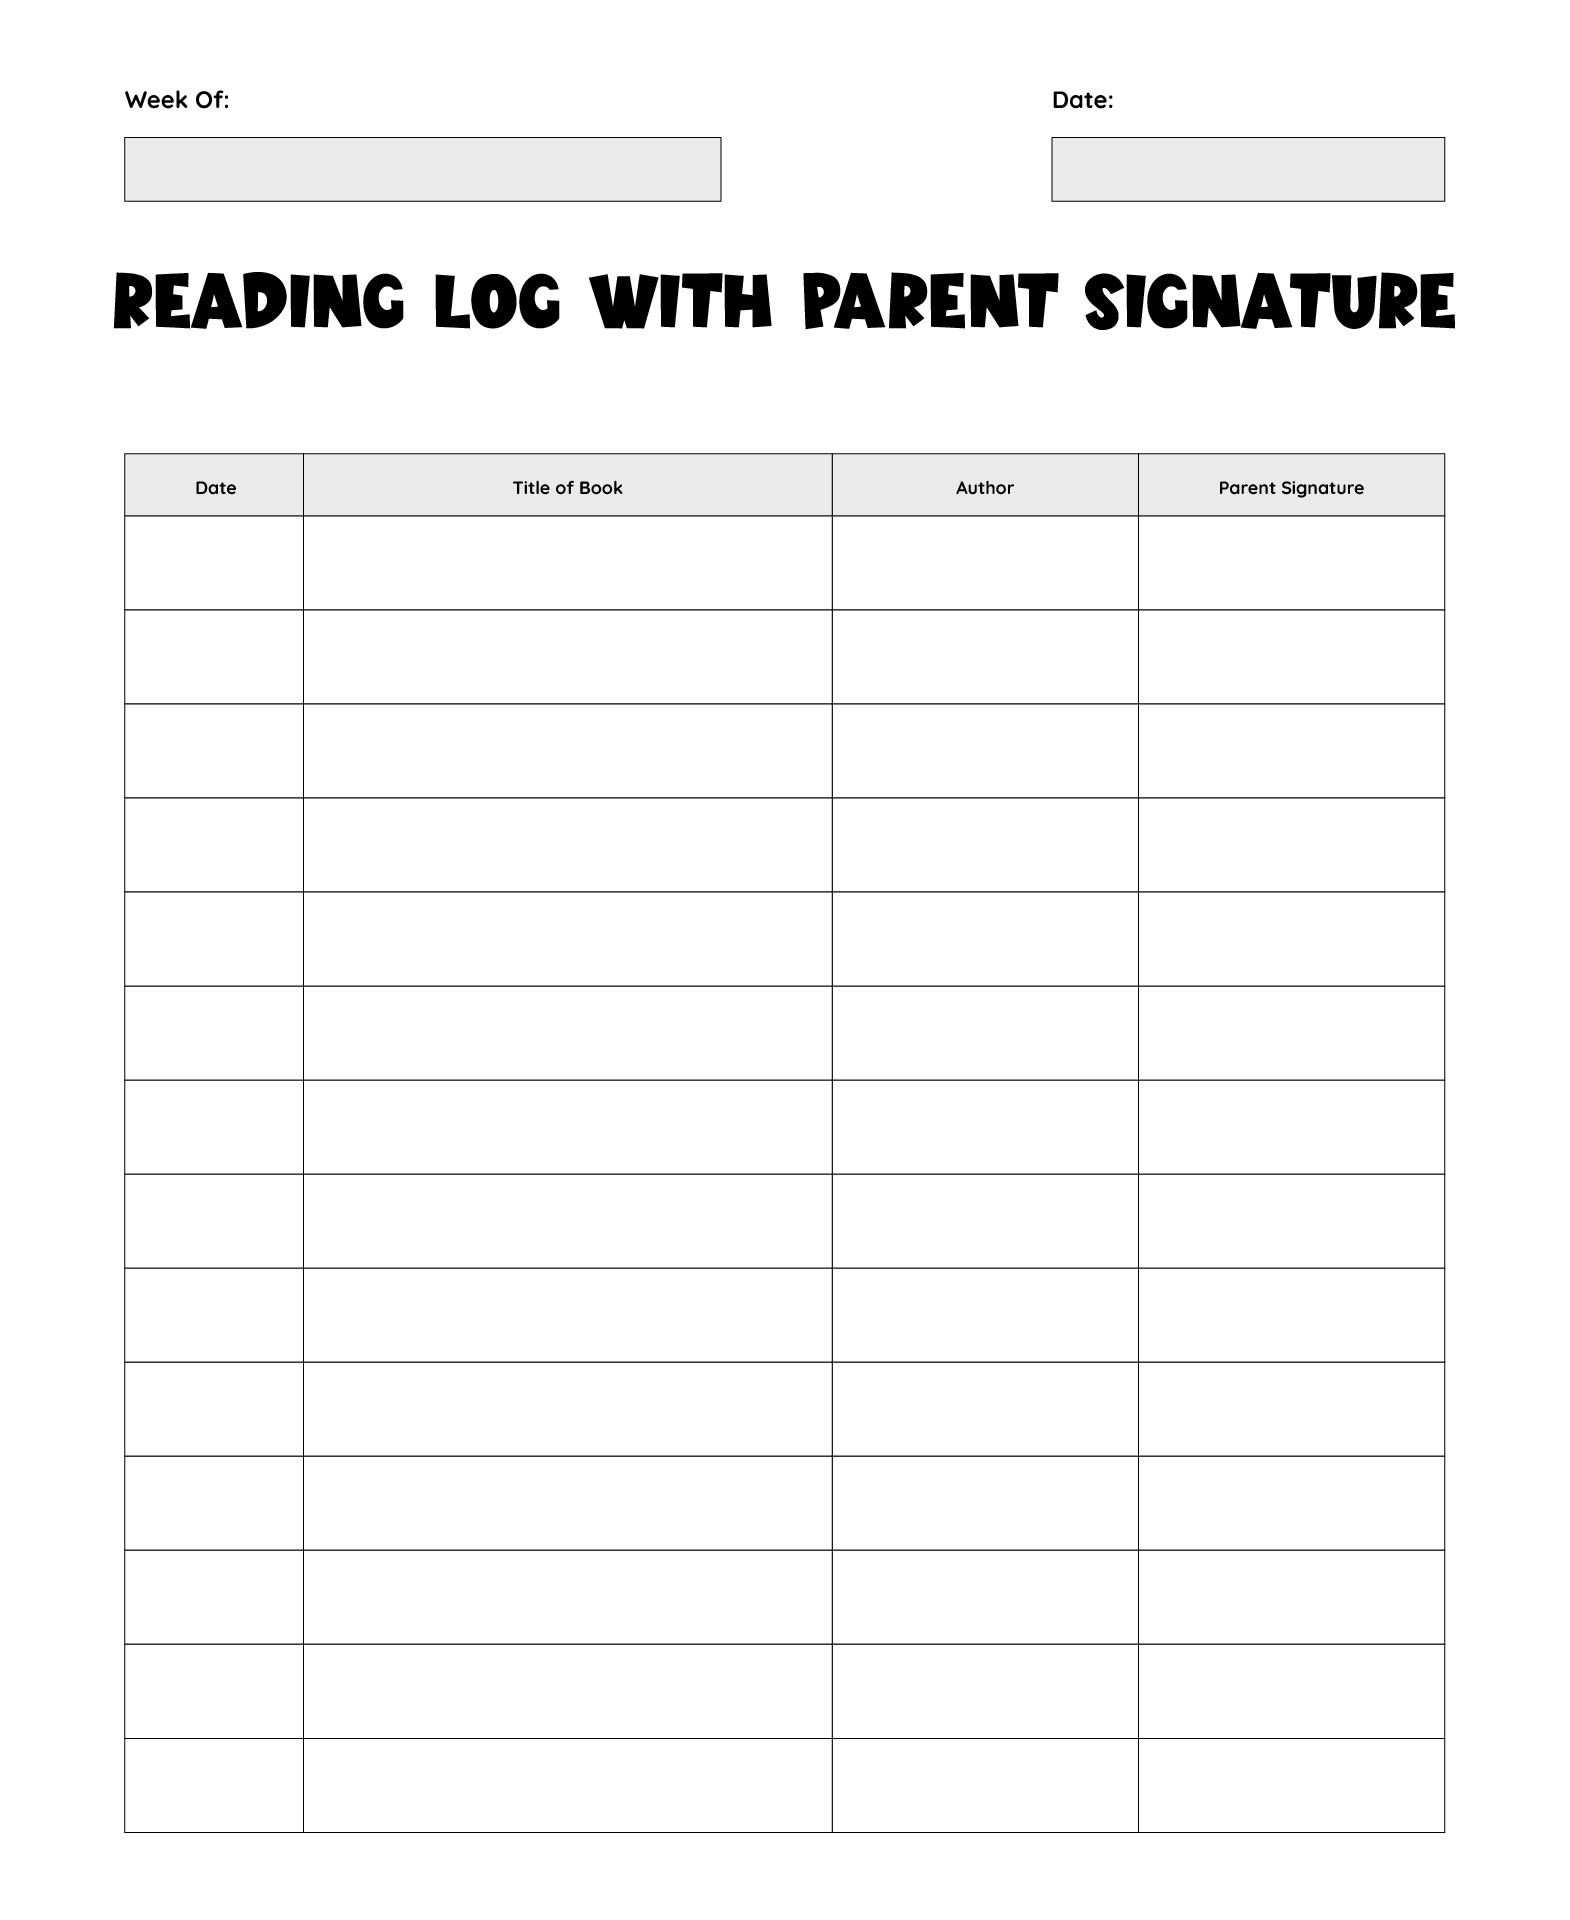 Reading Log with Parent Signature